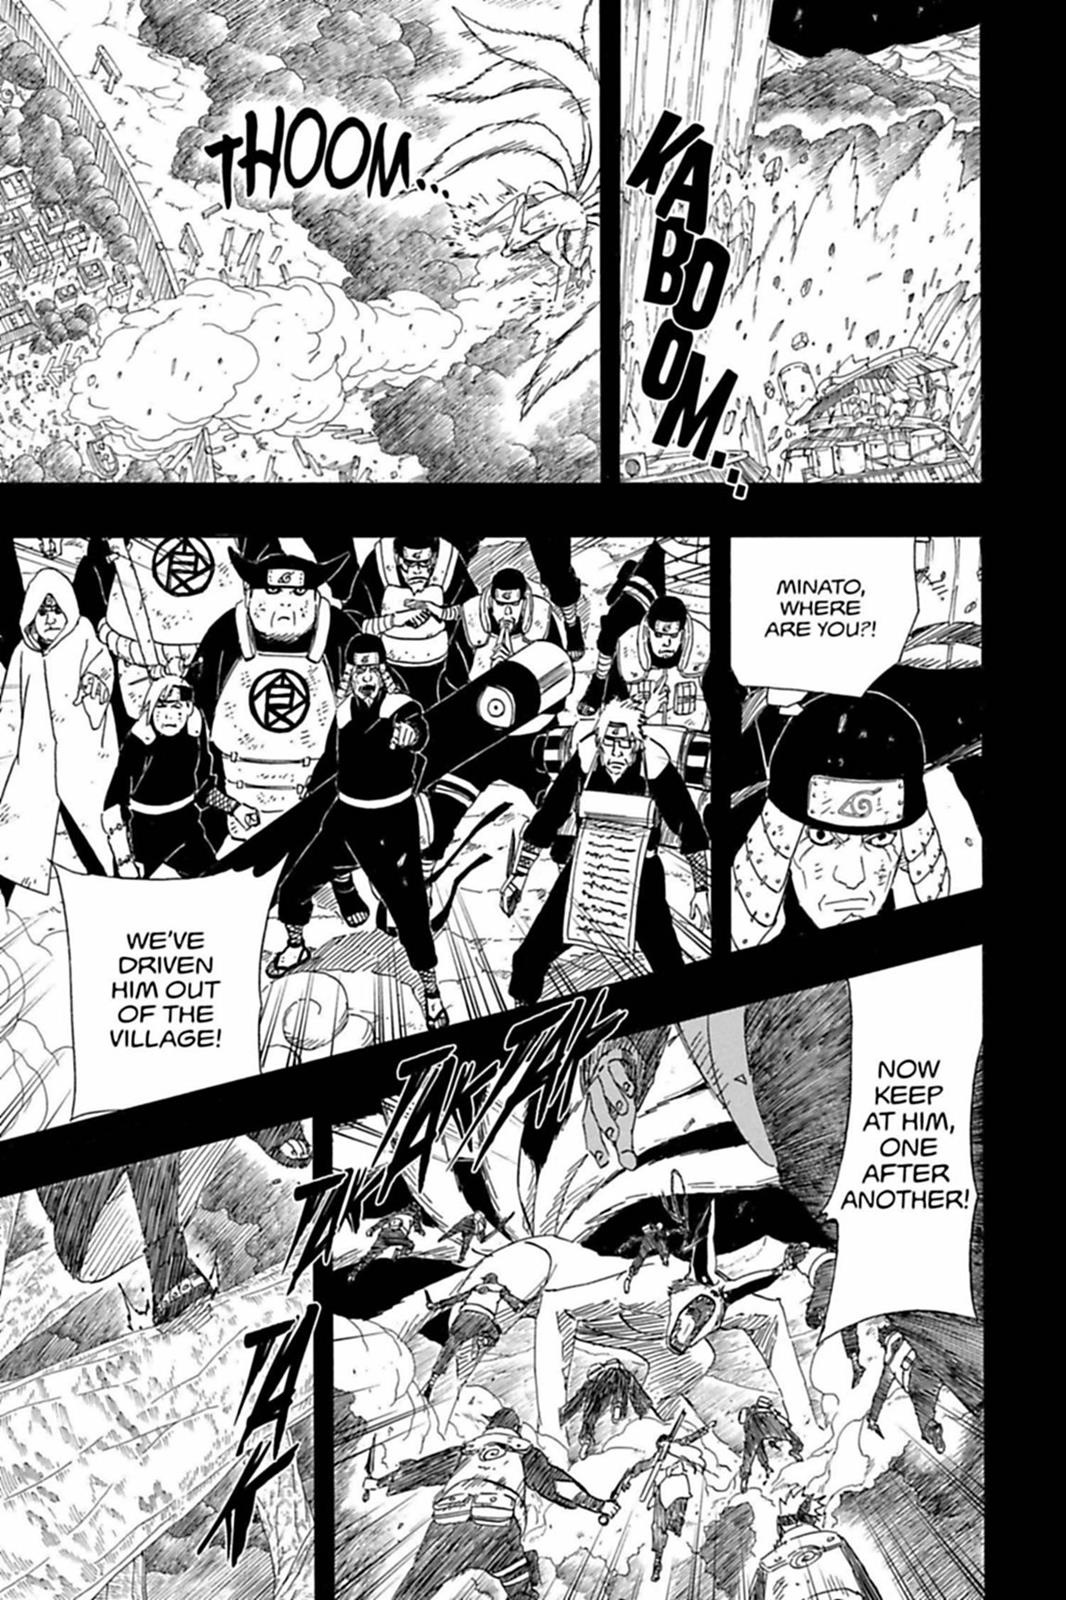 Ginkaku e Kira vs Tobirama e Minato - Página 4 0503-008